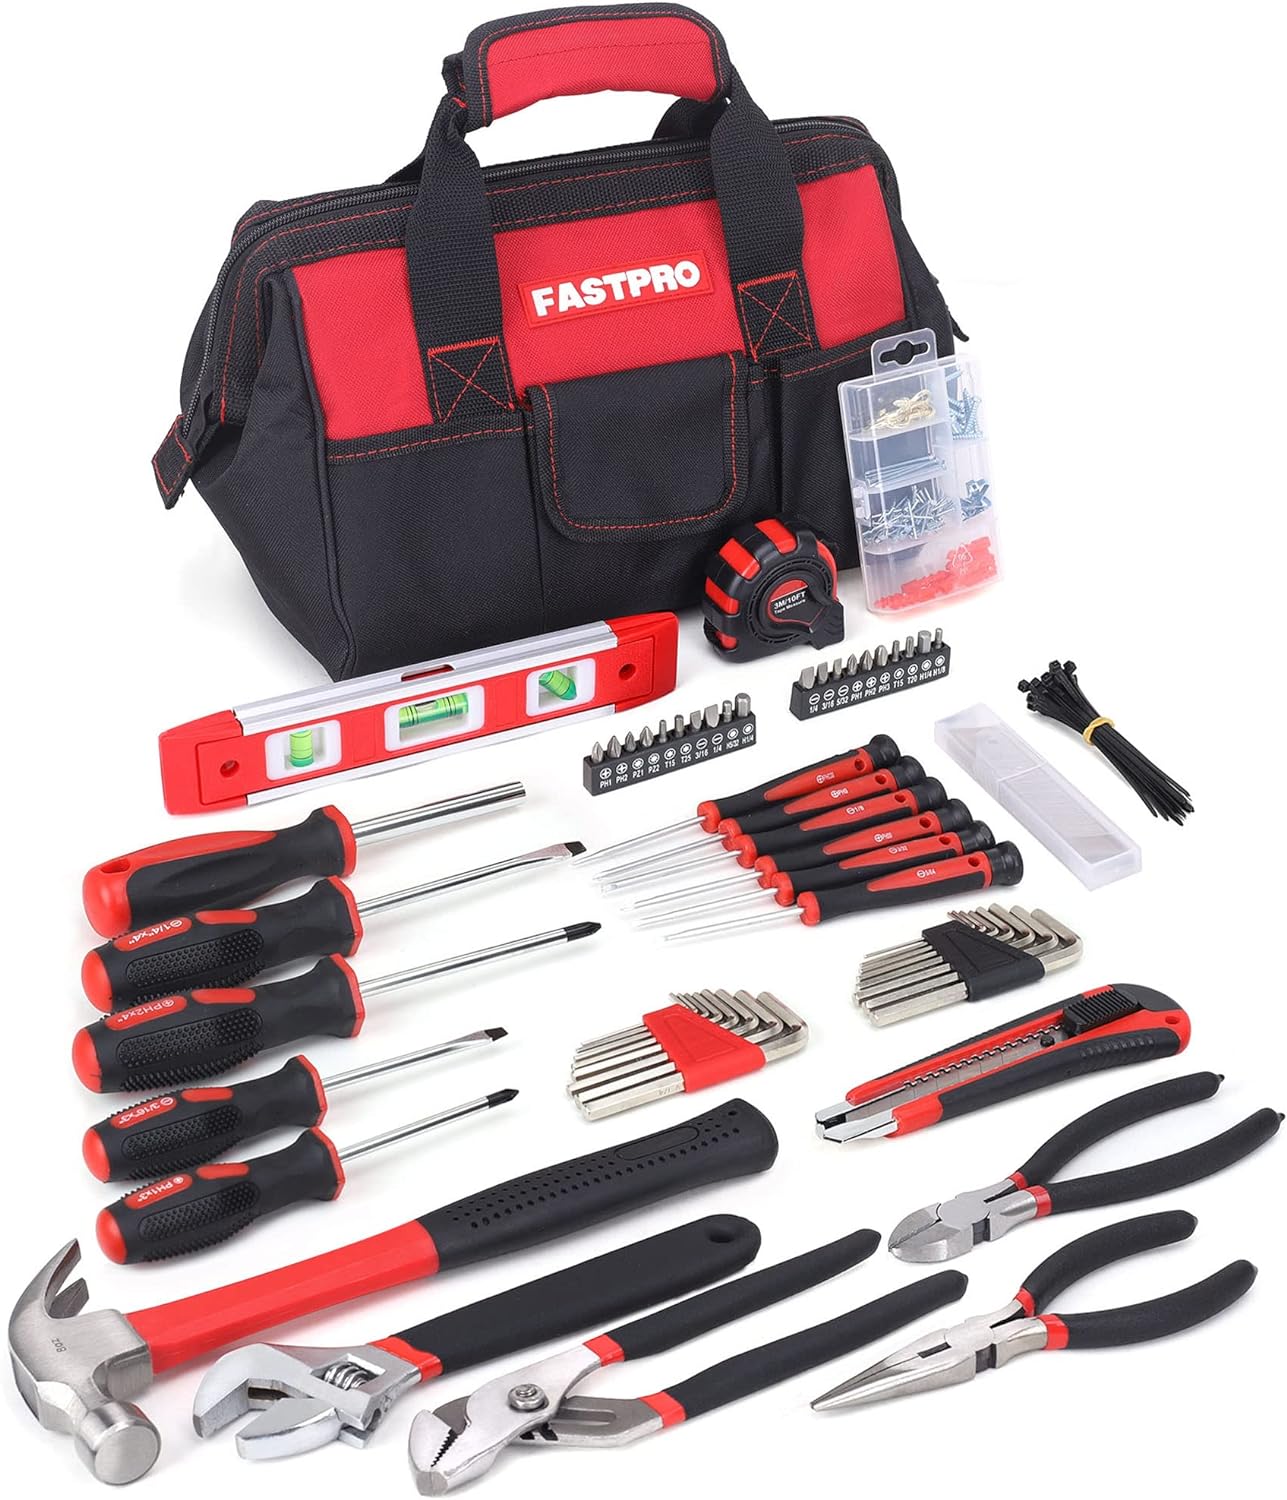 FASTPRO 215-Piece Home Repairing Tool Set Review